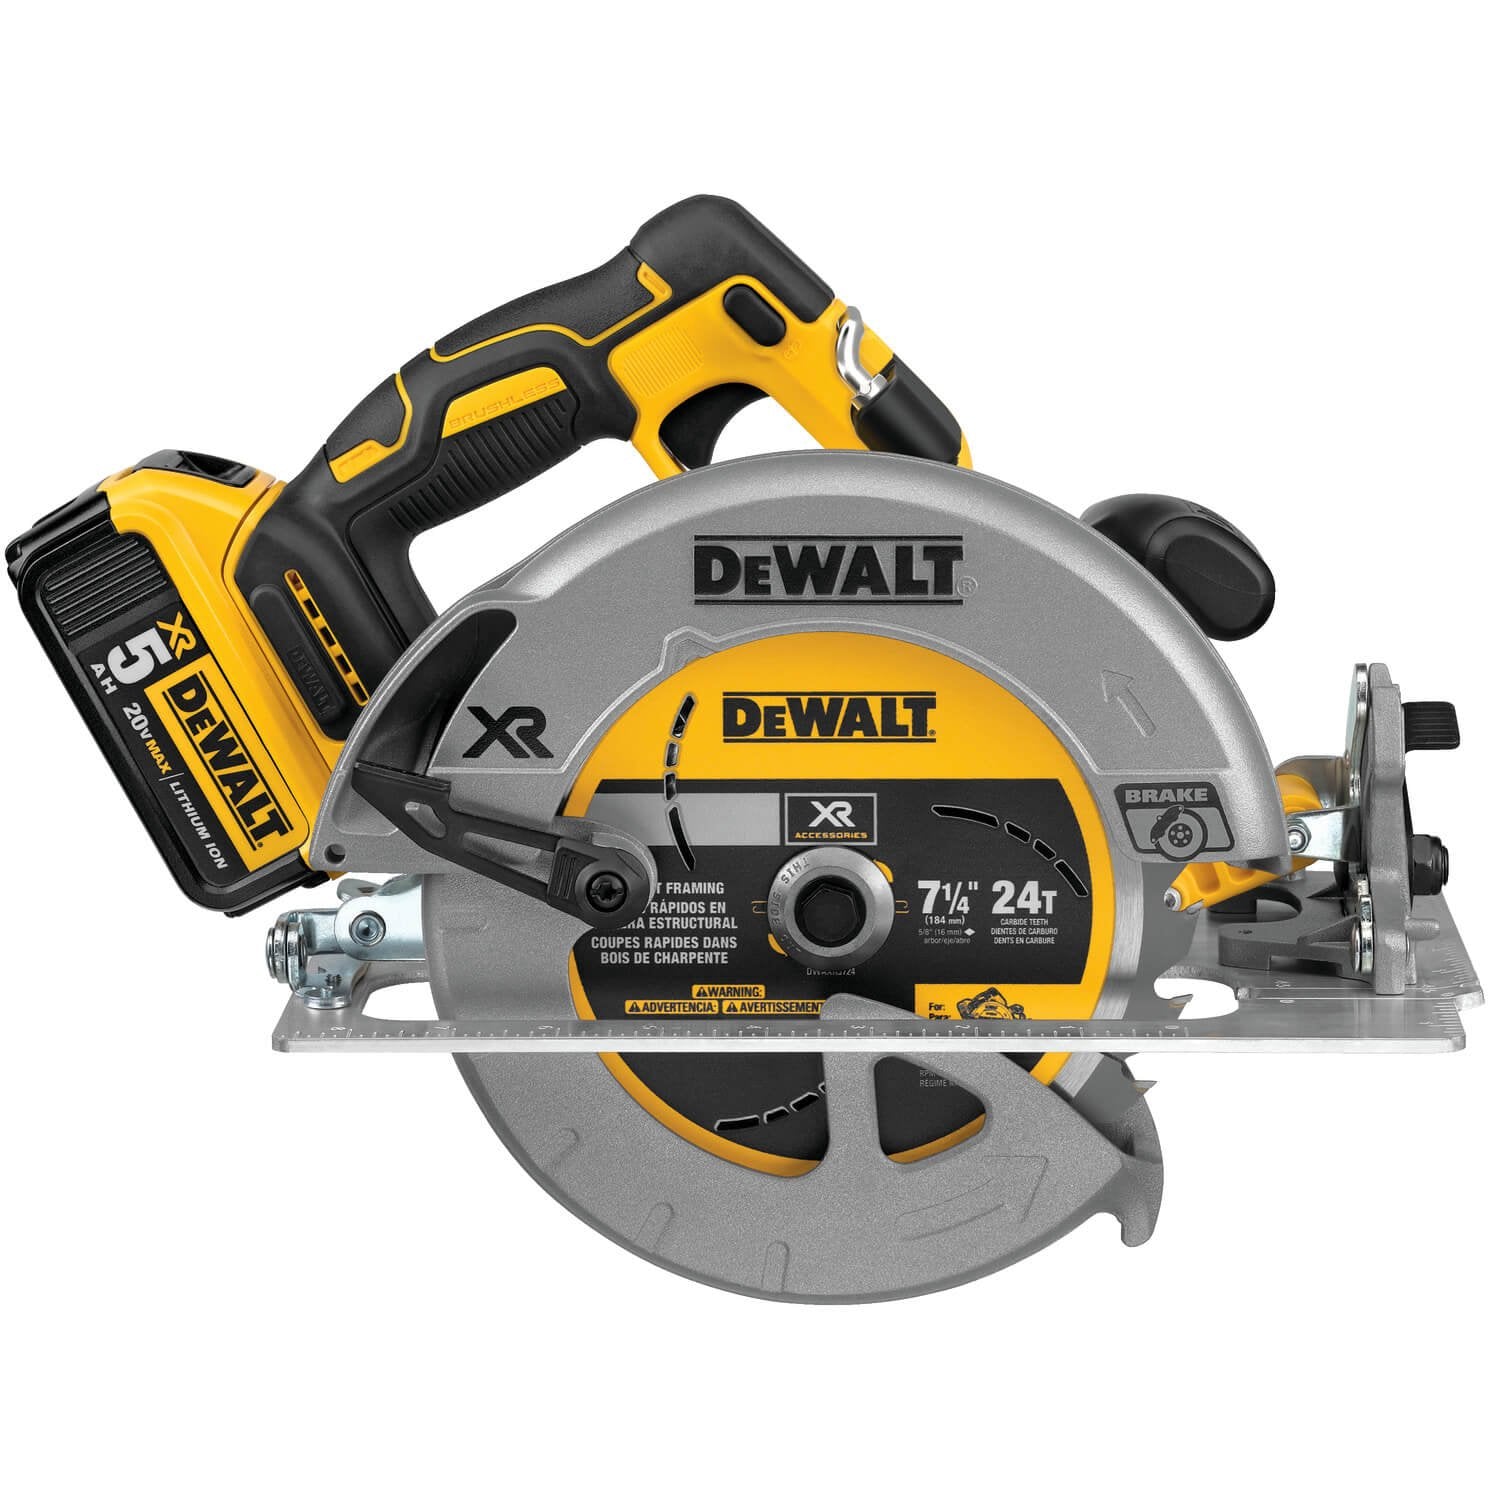 Dewalt DCS570P1 20V MAX XR 7-1/4" Circular Saw Kit